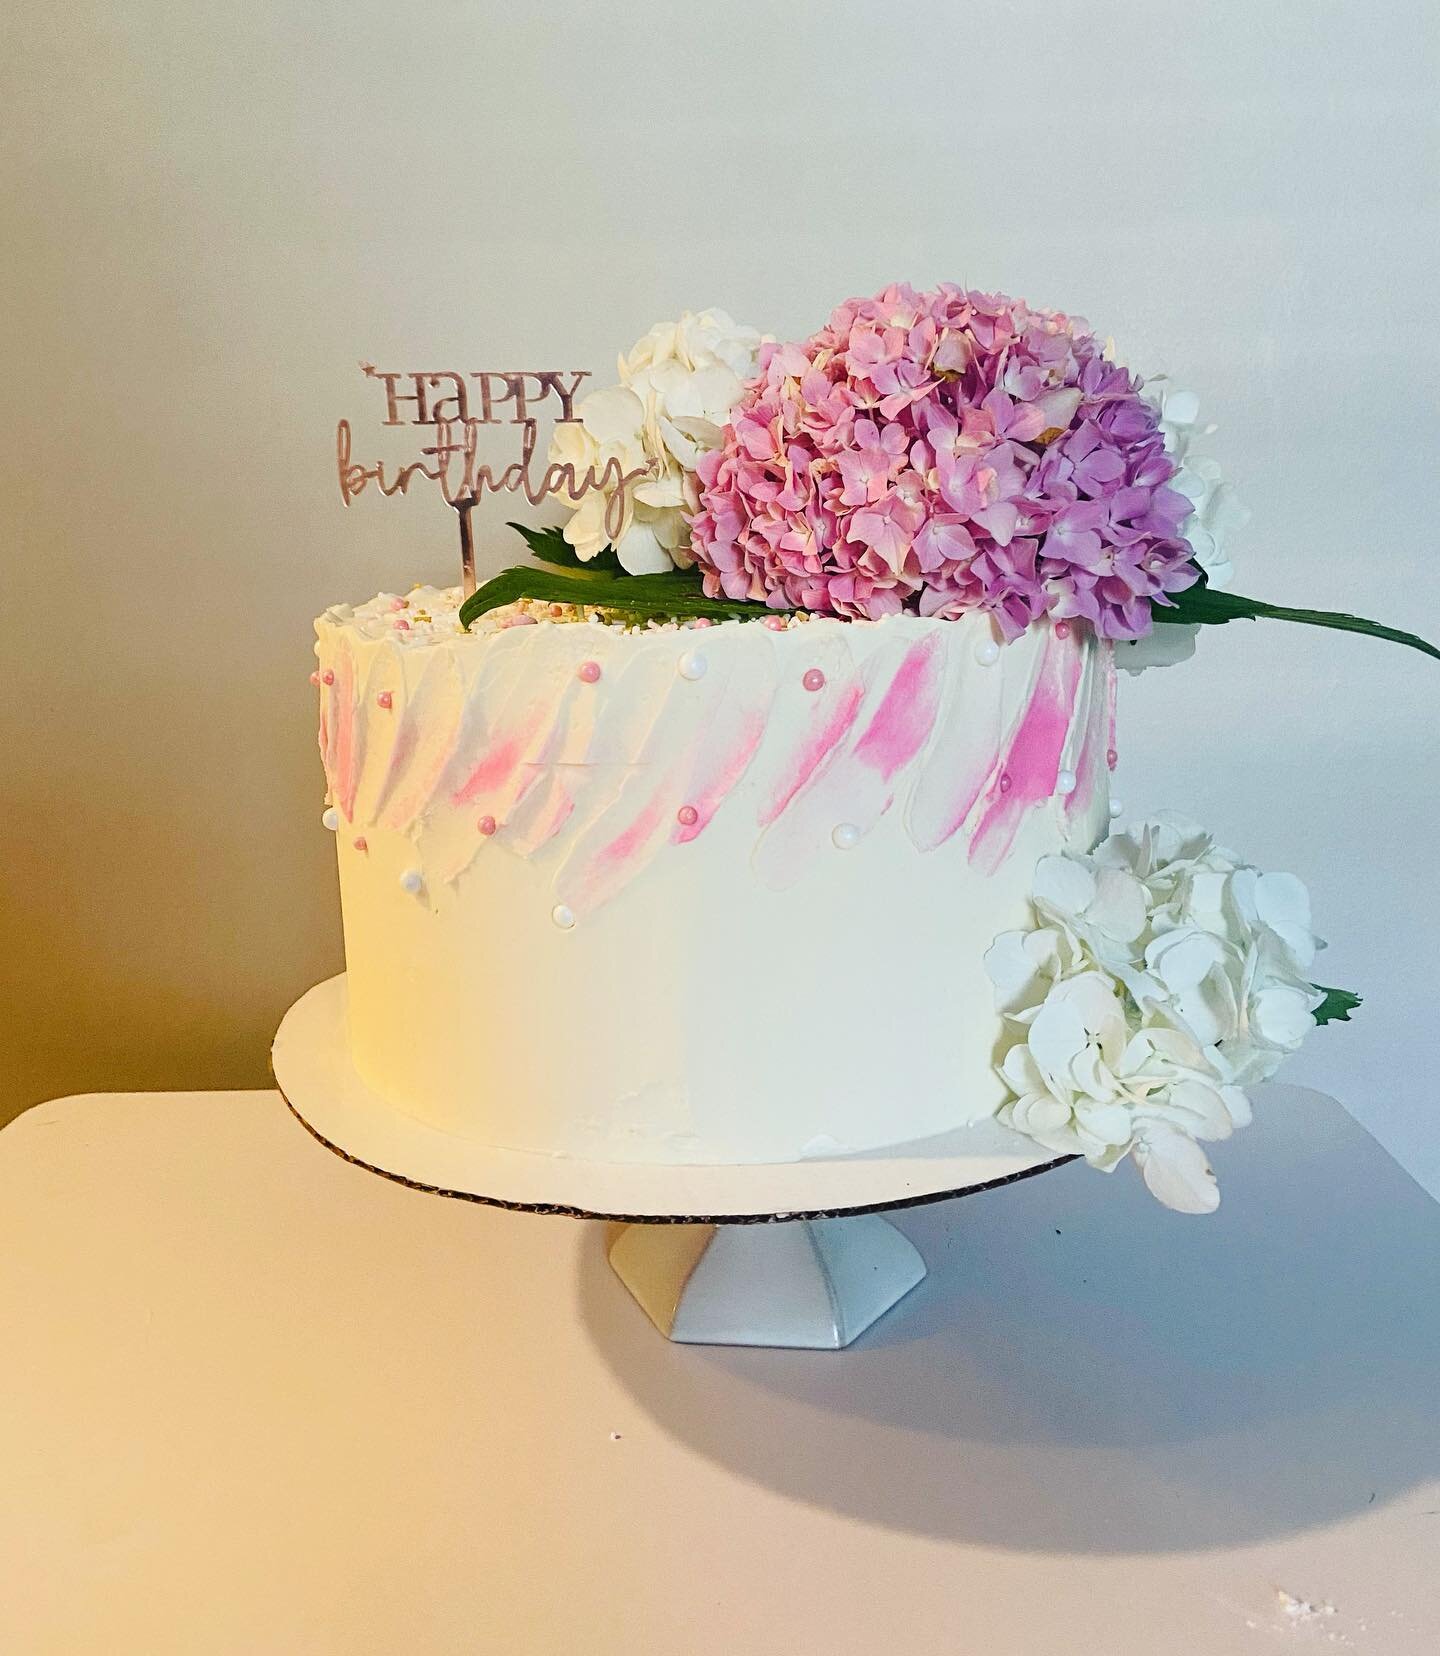 Simply elegant.
.
.
.
.
.
.
.
#cake #cakes #cakecakecake #cakeoftheday #cakedecorating #caketrends #cakeideas #cakeinspiration #cakeinspo #cakedesign #cakewithflowers #flowercake #birthdaycake #birthdaycakes #franklincakes #nashvillescakes #nashville